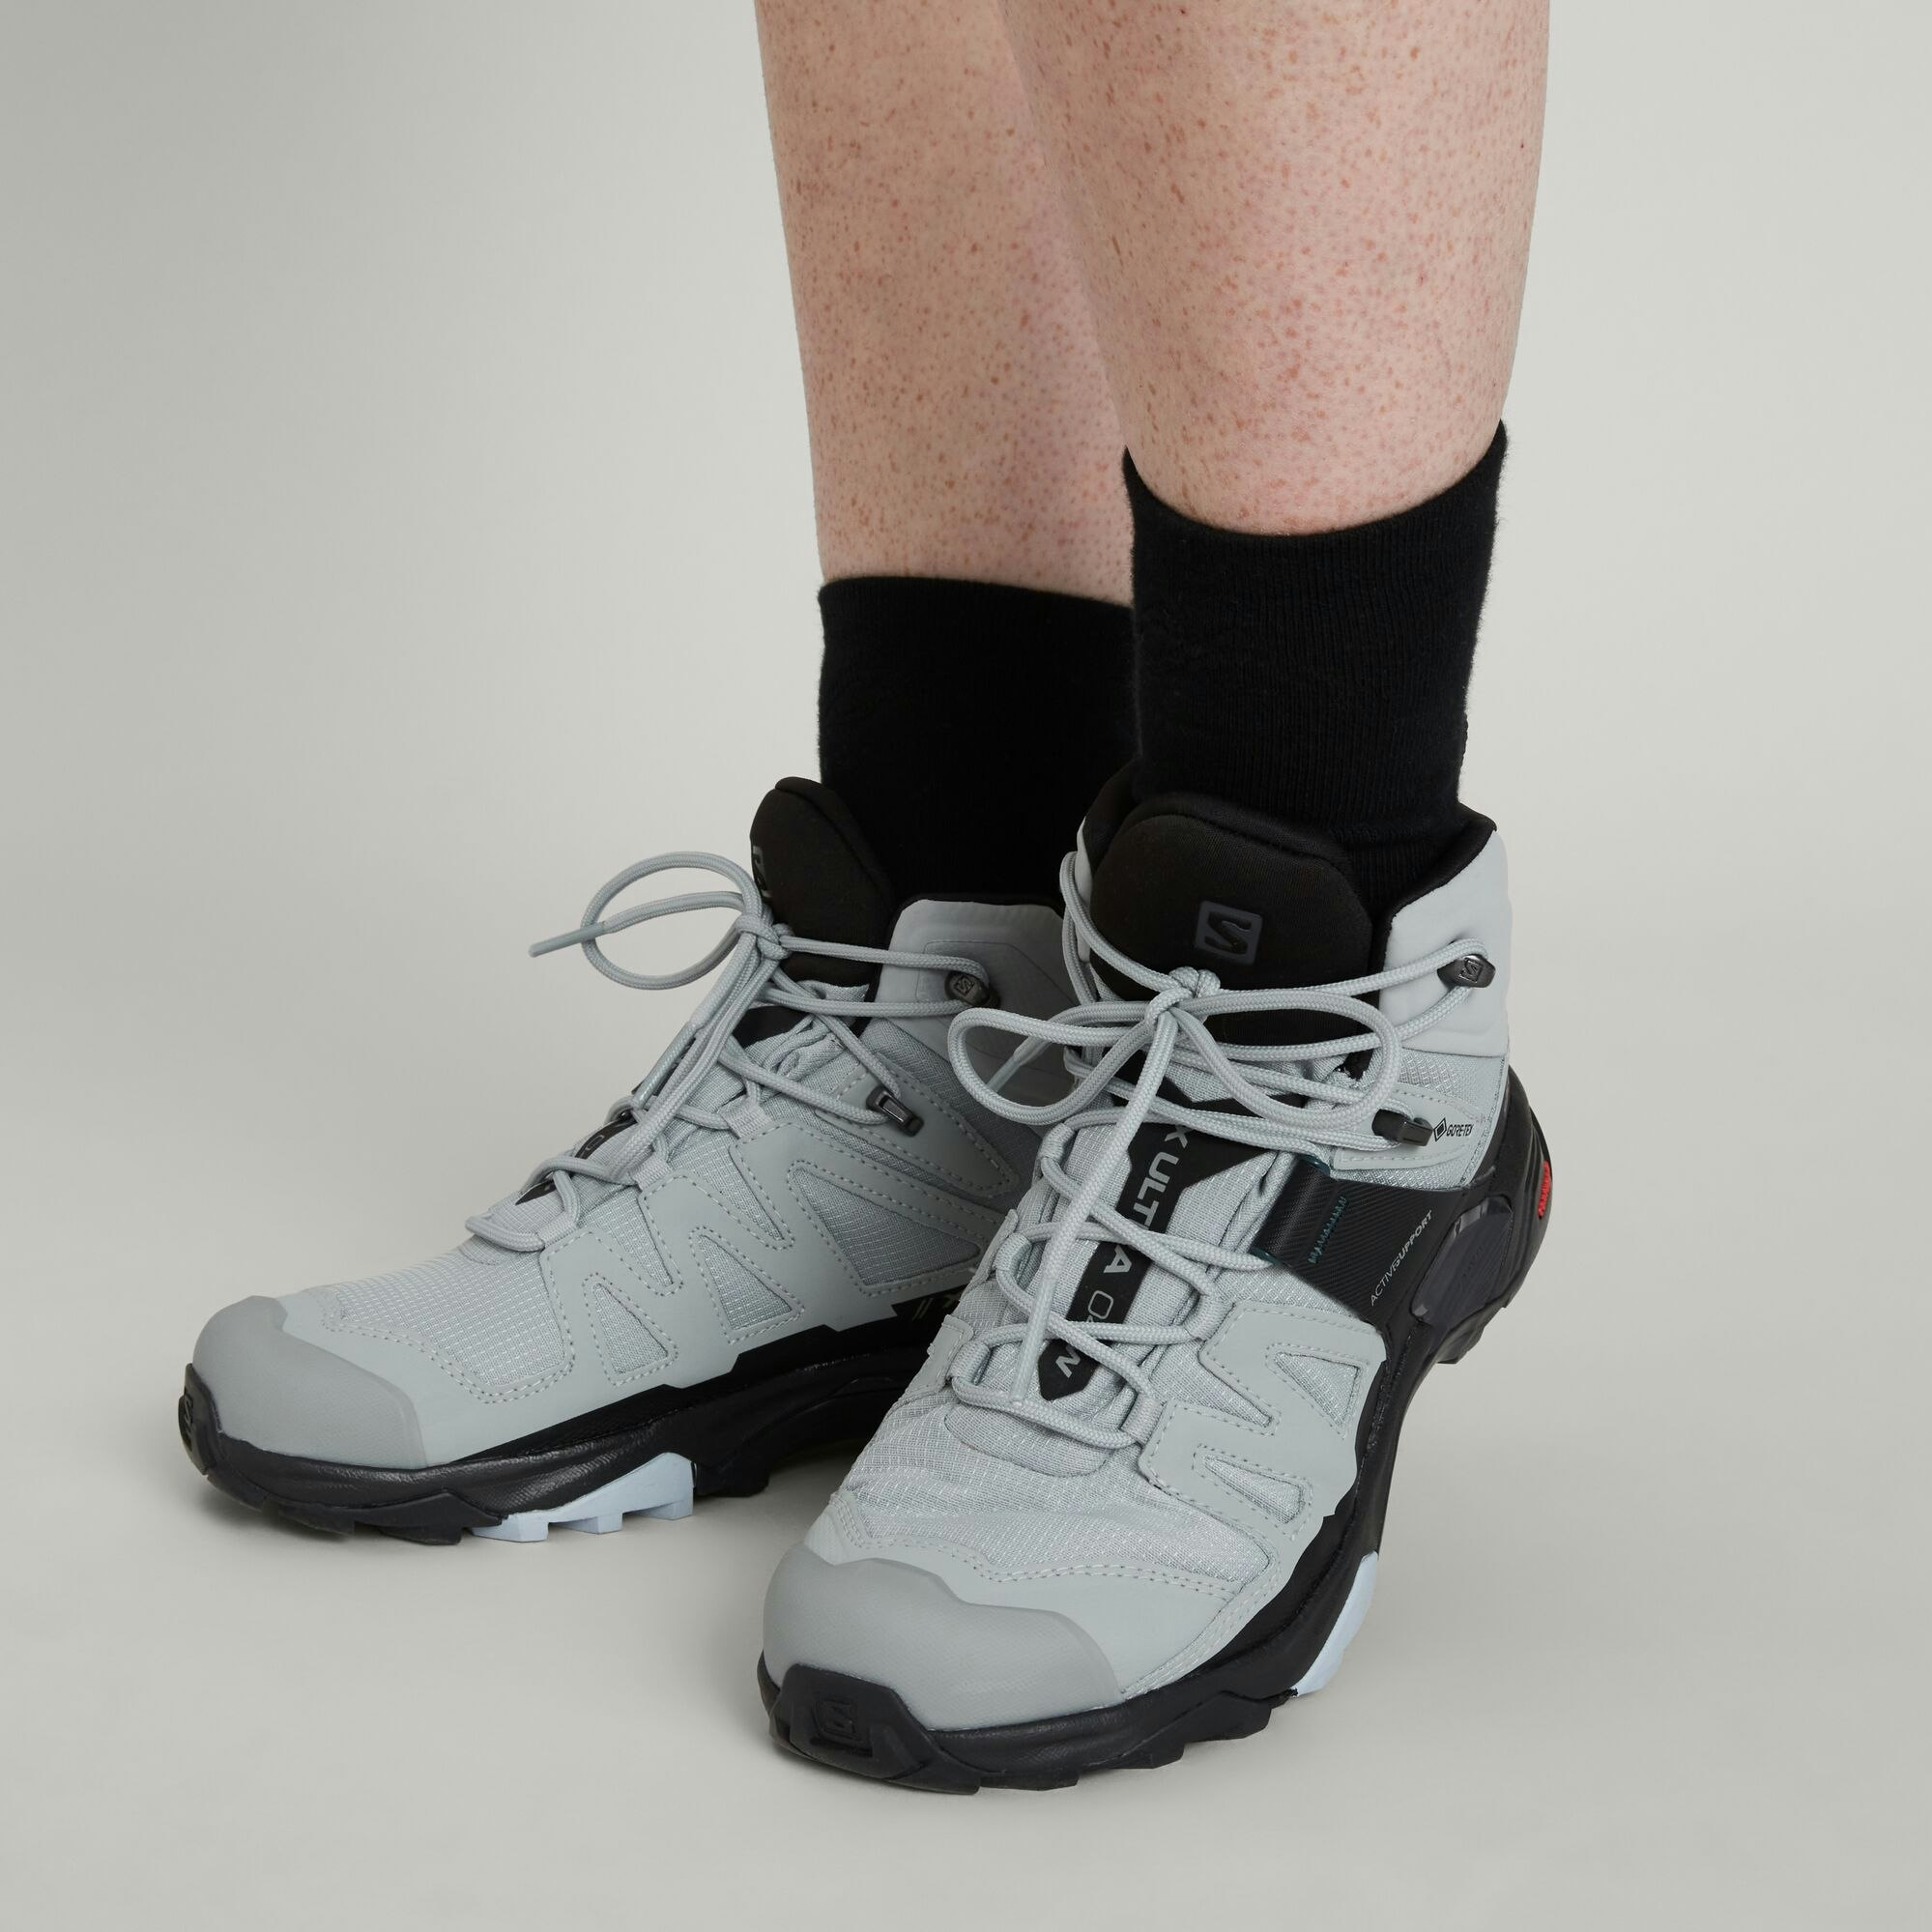 Salomon X Ultra 4 Mid GTX Hiking Shoe - Women's